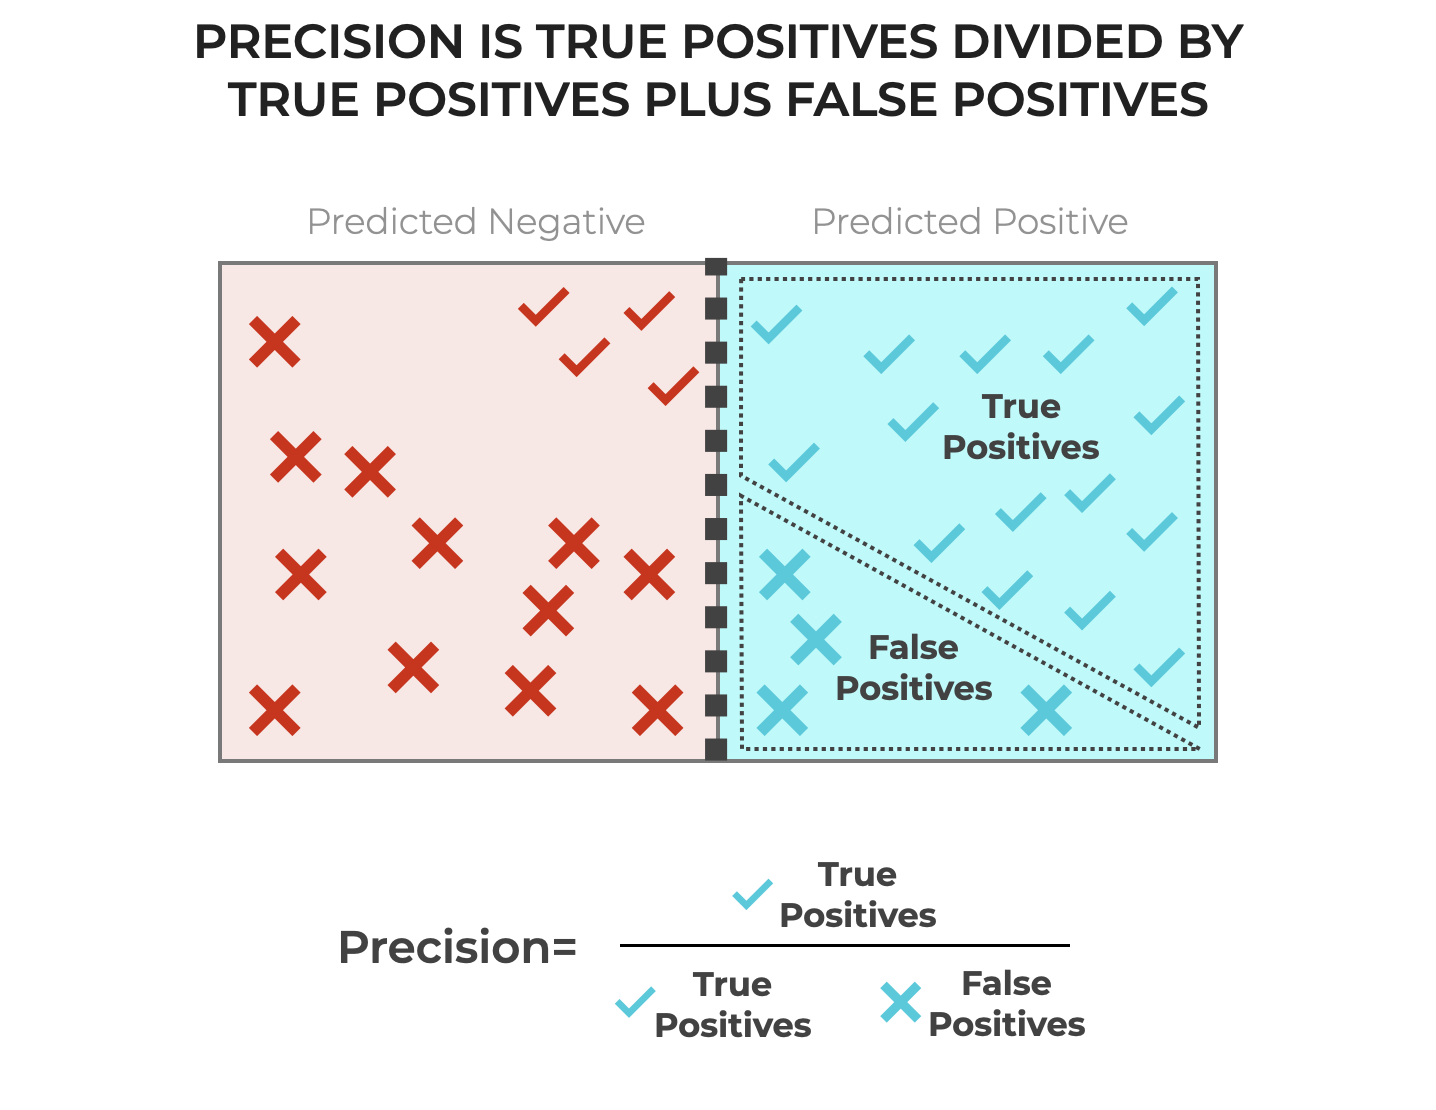 A simple image that visualizes classification precision as true positives divided by true positives plus false positives.